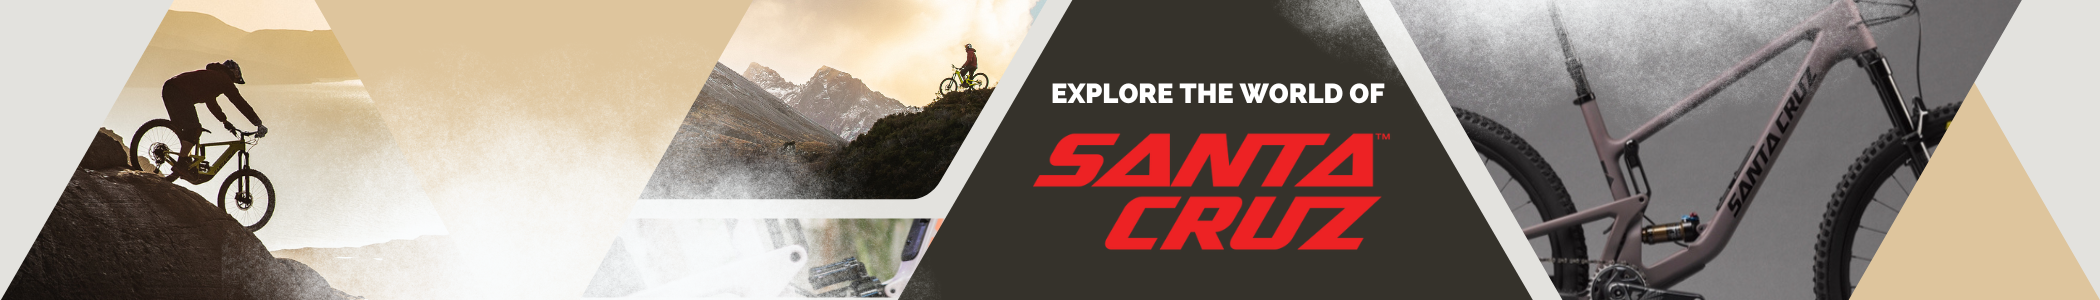 Explore the world of Santa Cruz!